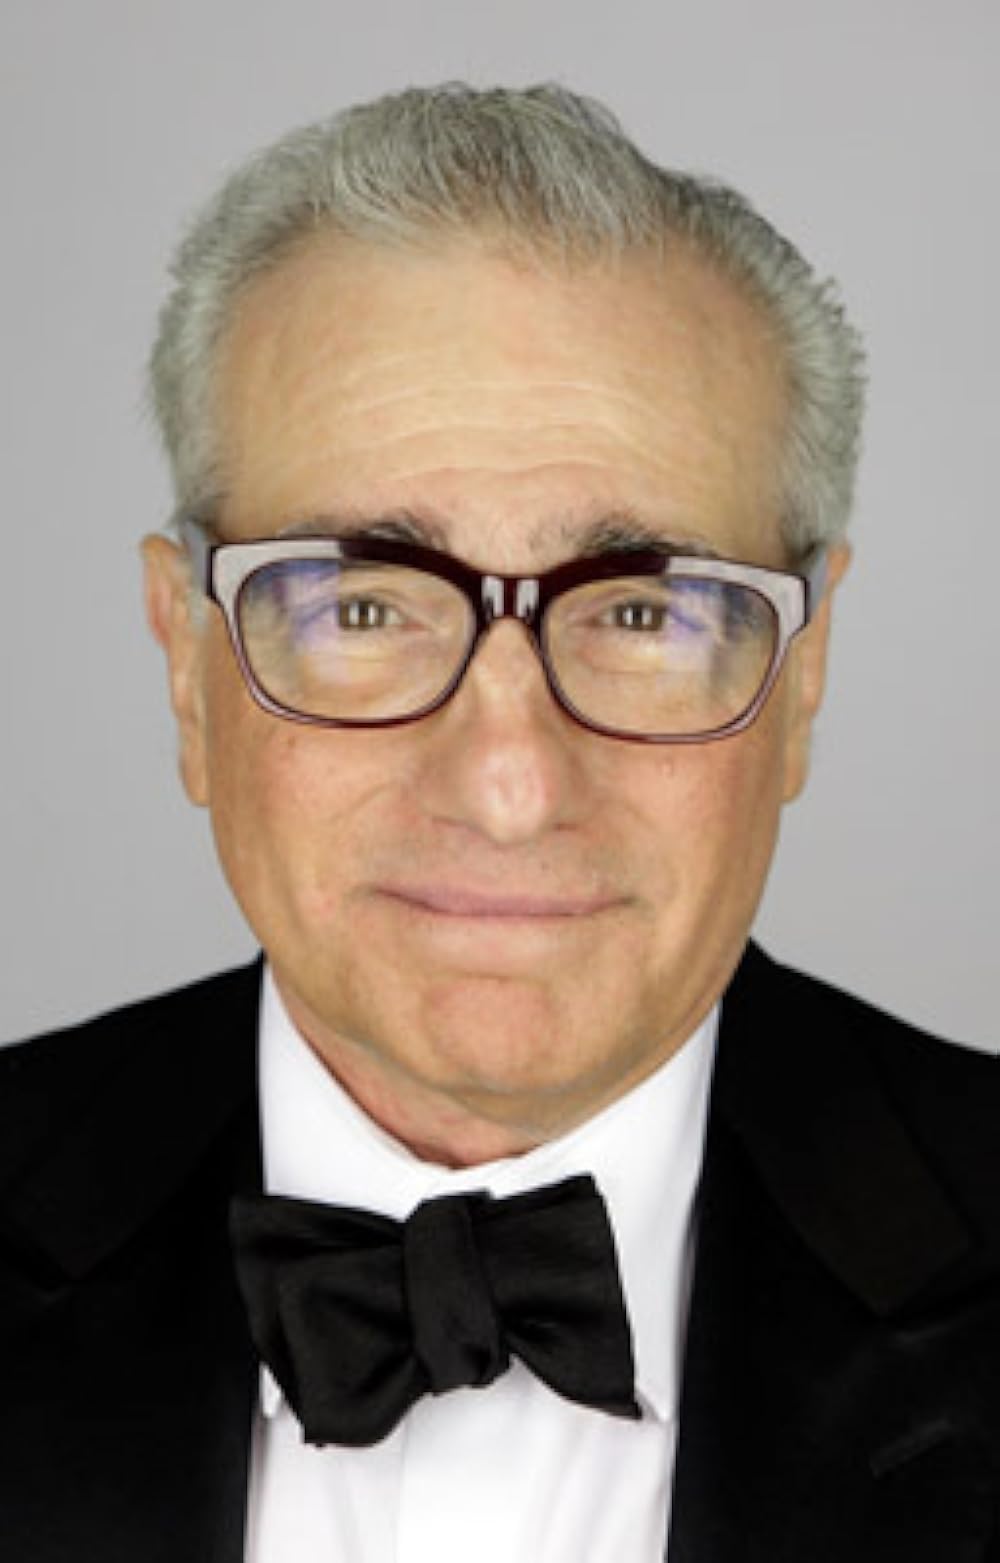 Martin Scorsese is not dead